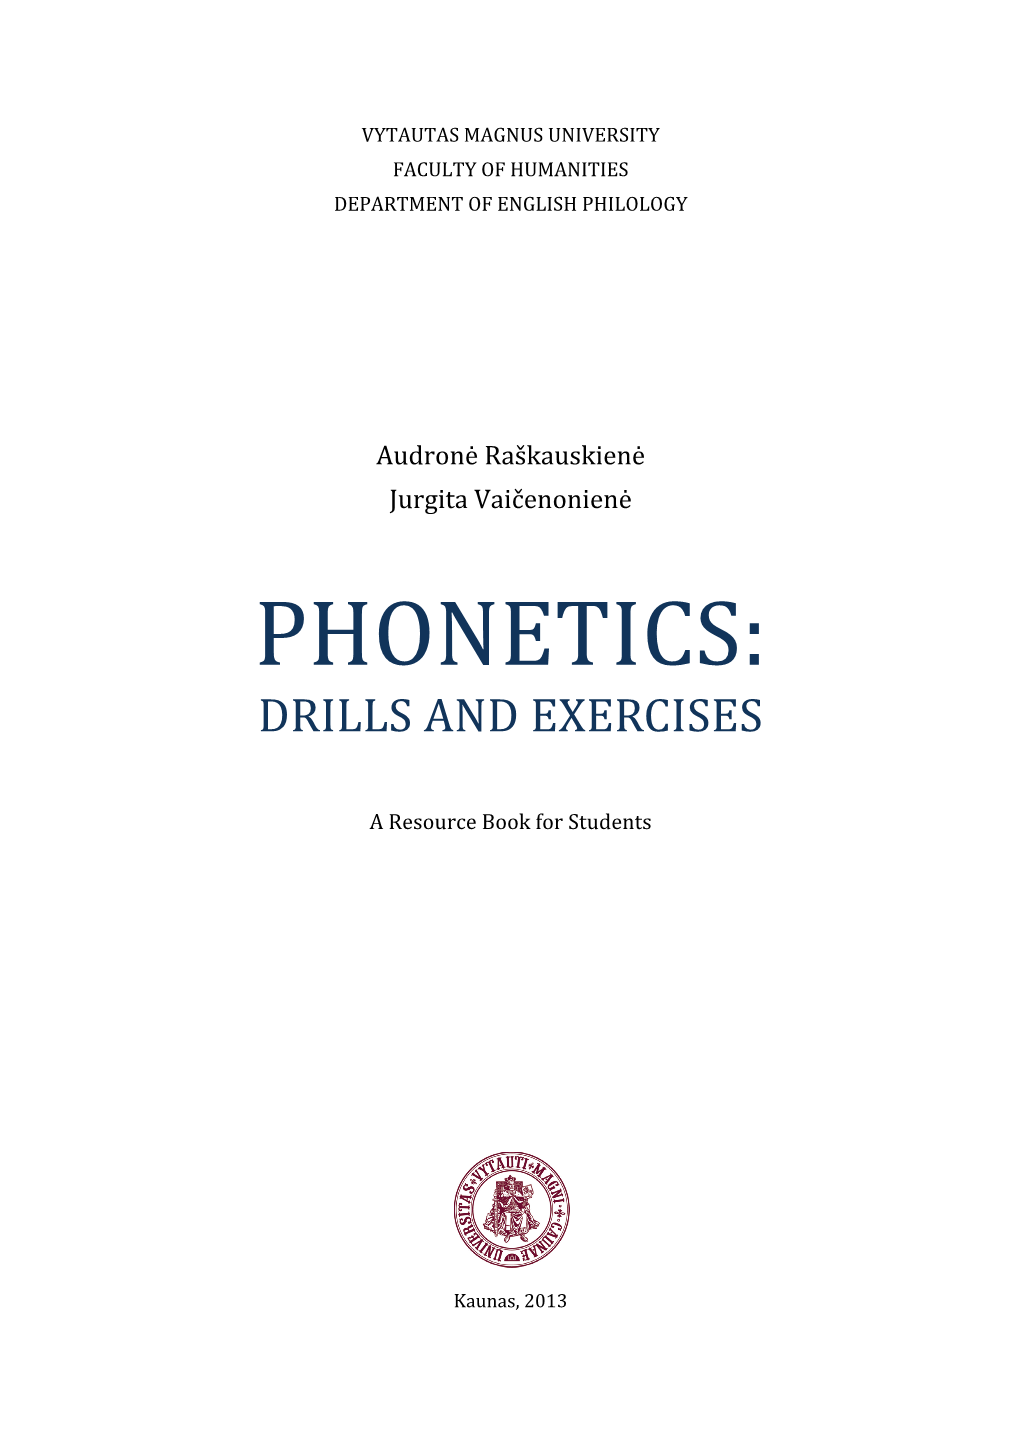 Phonetics: Drills and Exercises